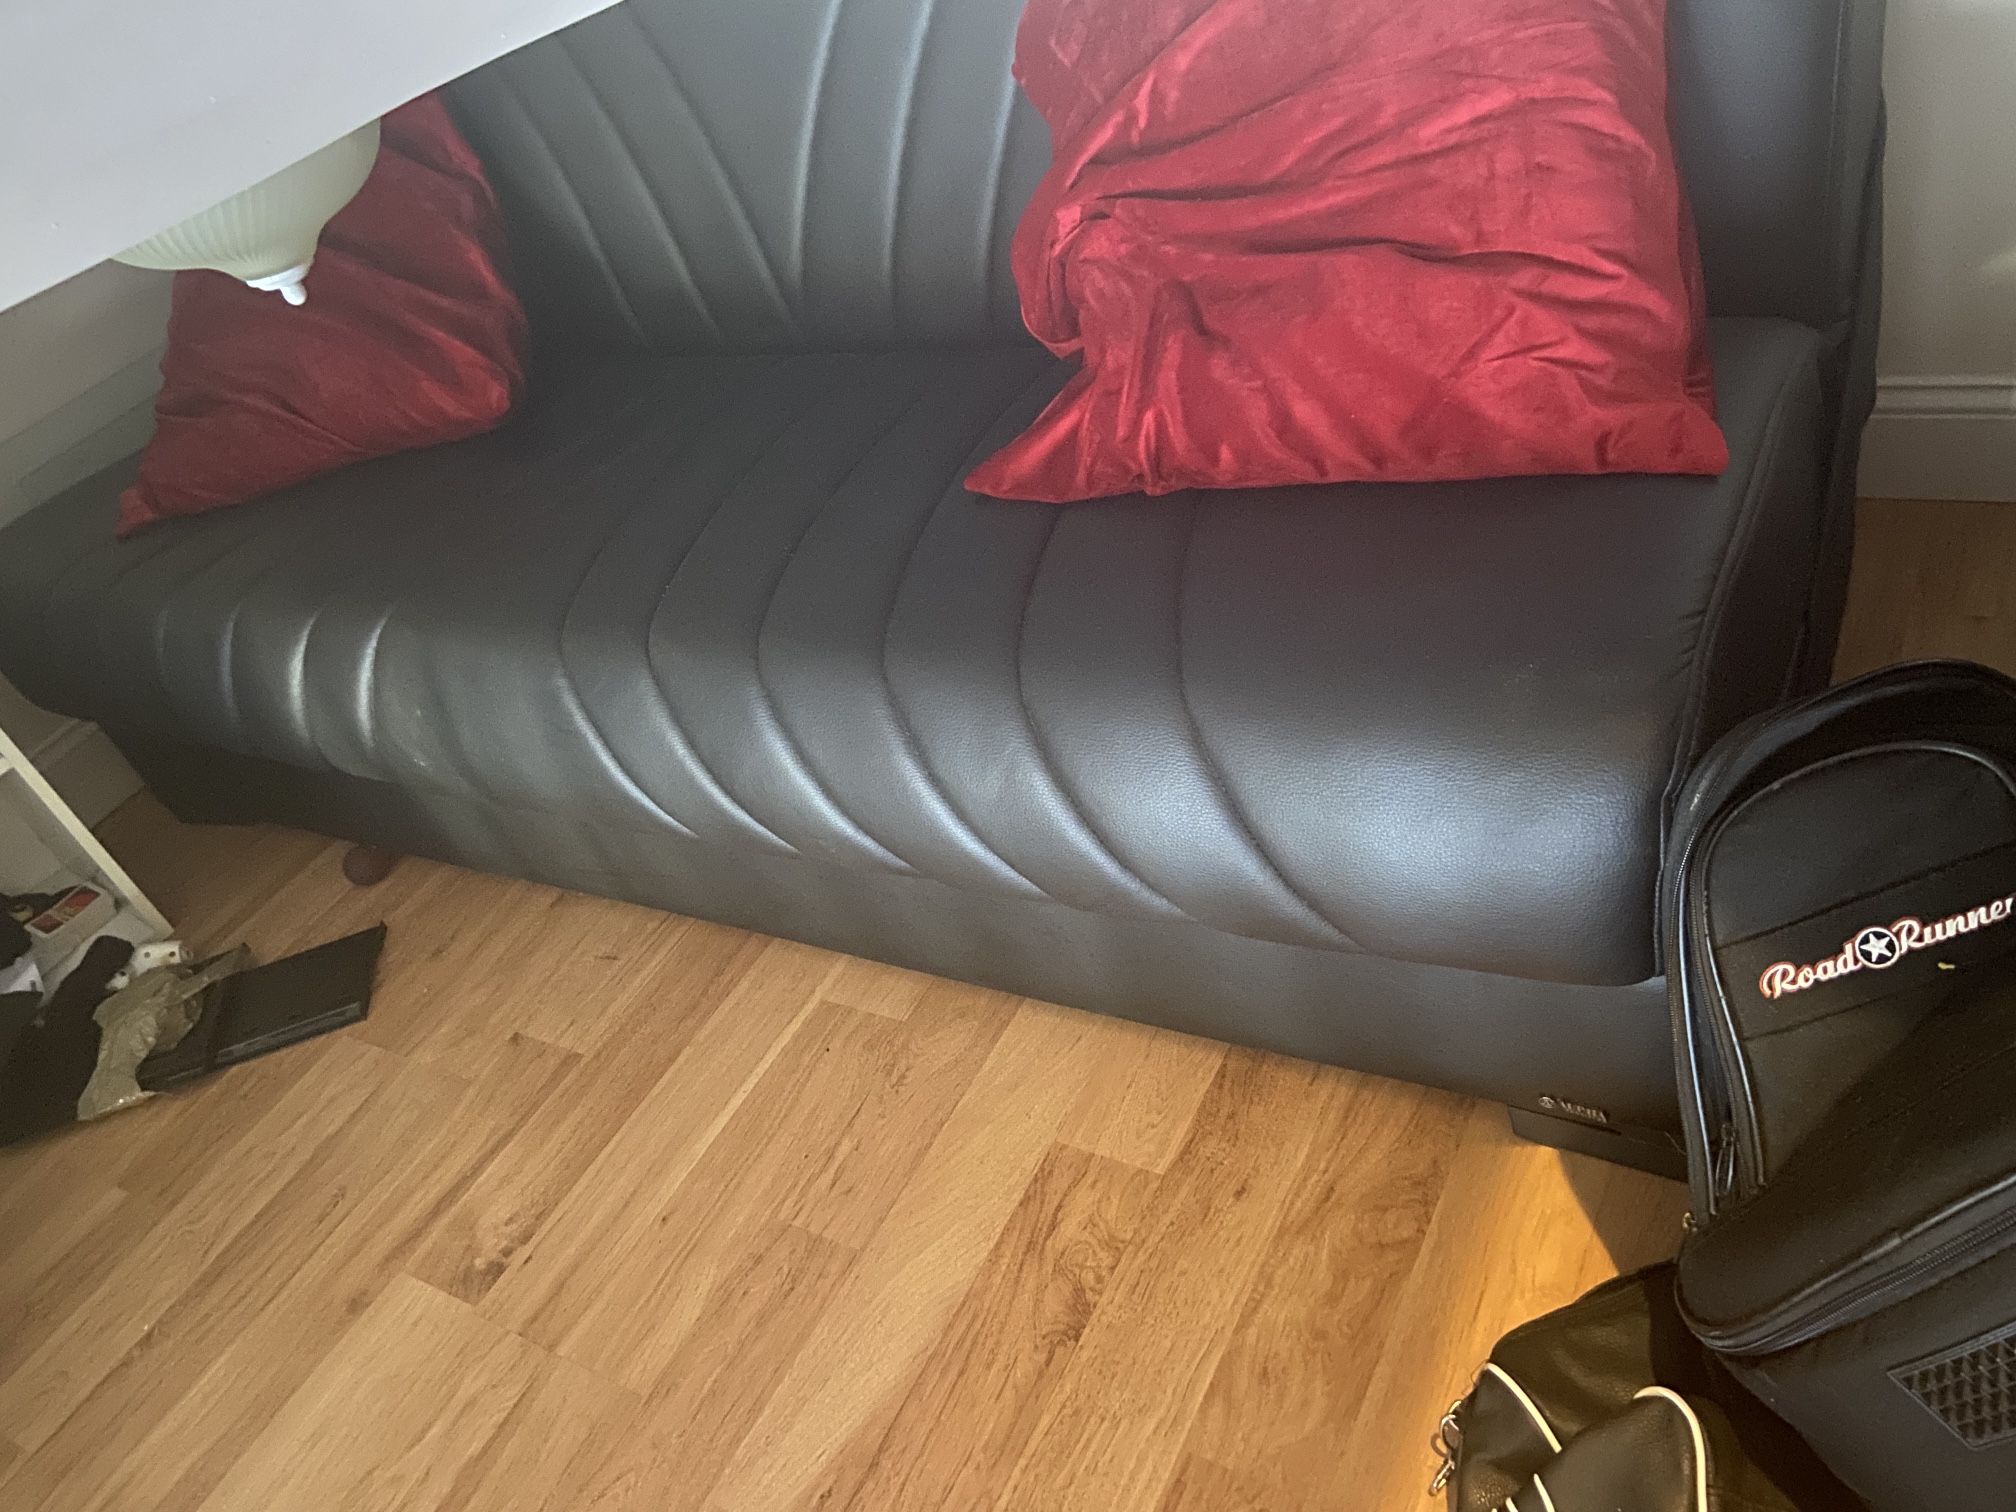 Black Futon Sofa ***New Never Used  $200